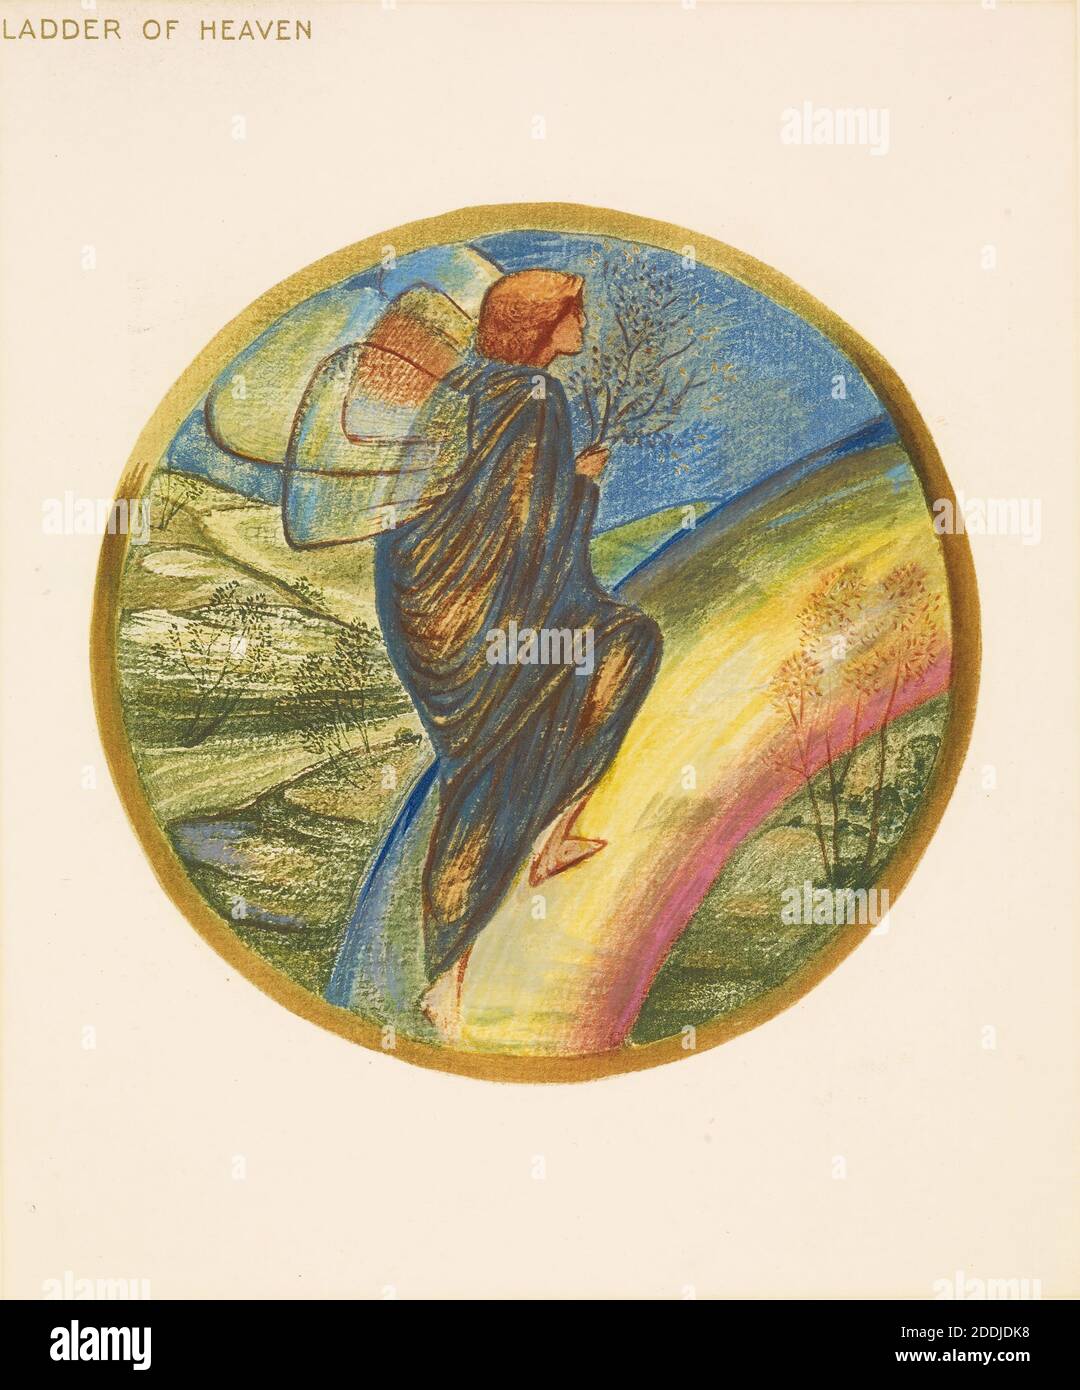 From The Flower Book, Ladder of Heaven, 1905 Sir Edward Burne-Jones, Book, Art Movement, Pre-Raphaelite, Landscape, 19th Century, Flower, Rainbow, Printing, Collotype Stock Photo